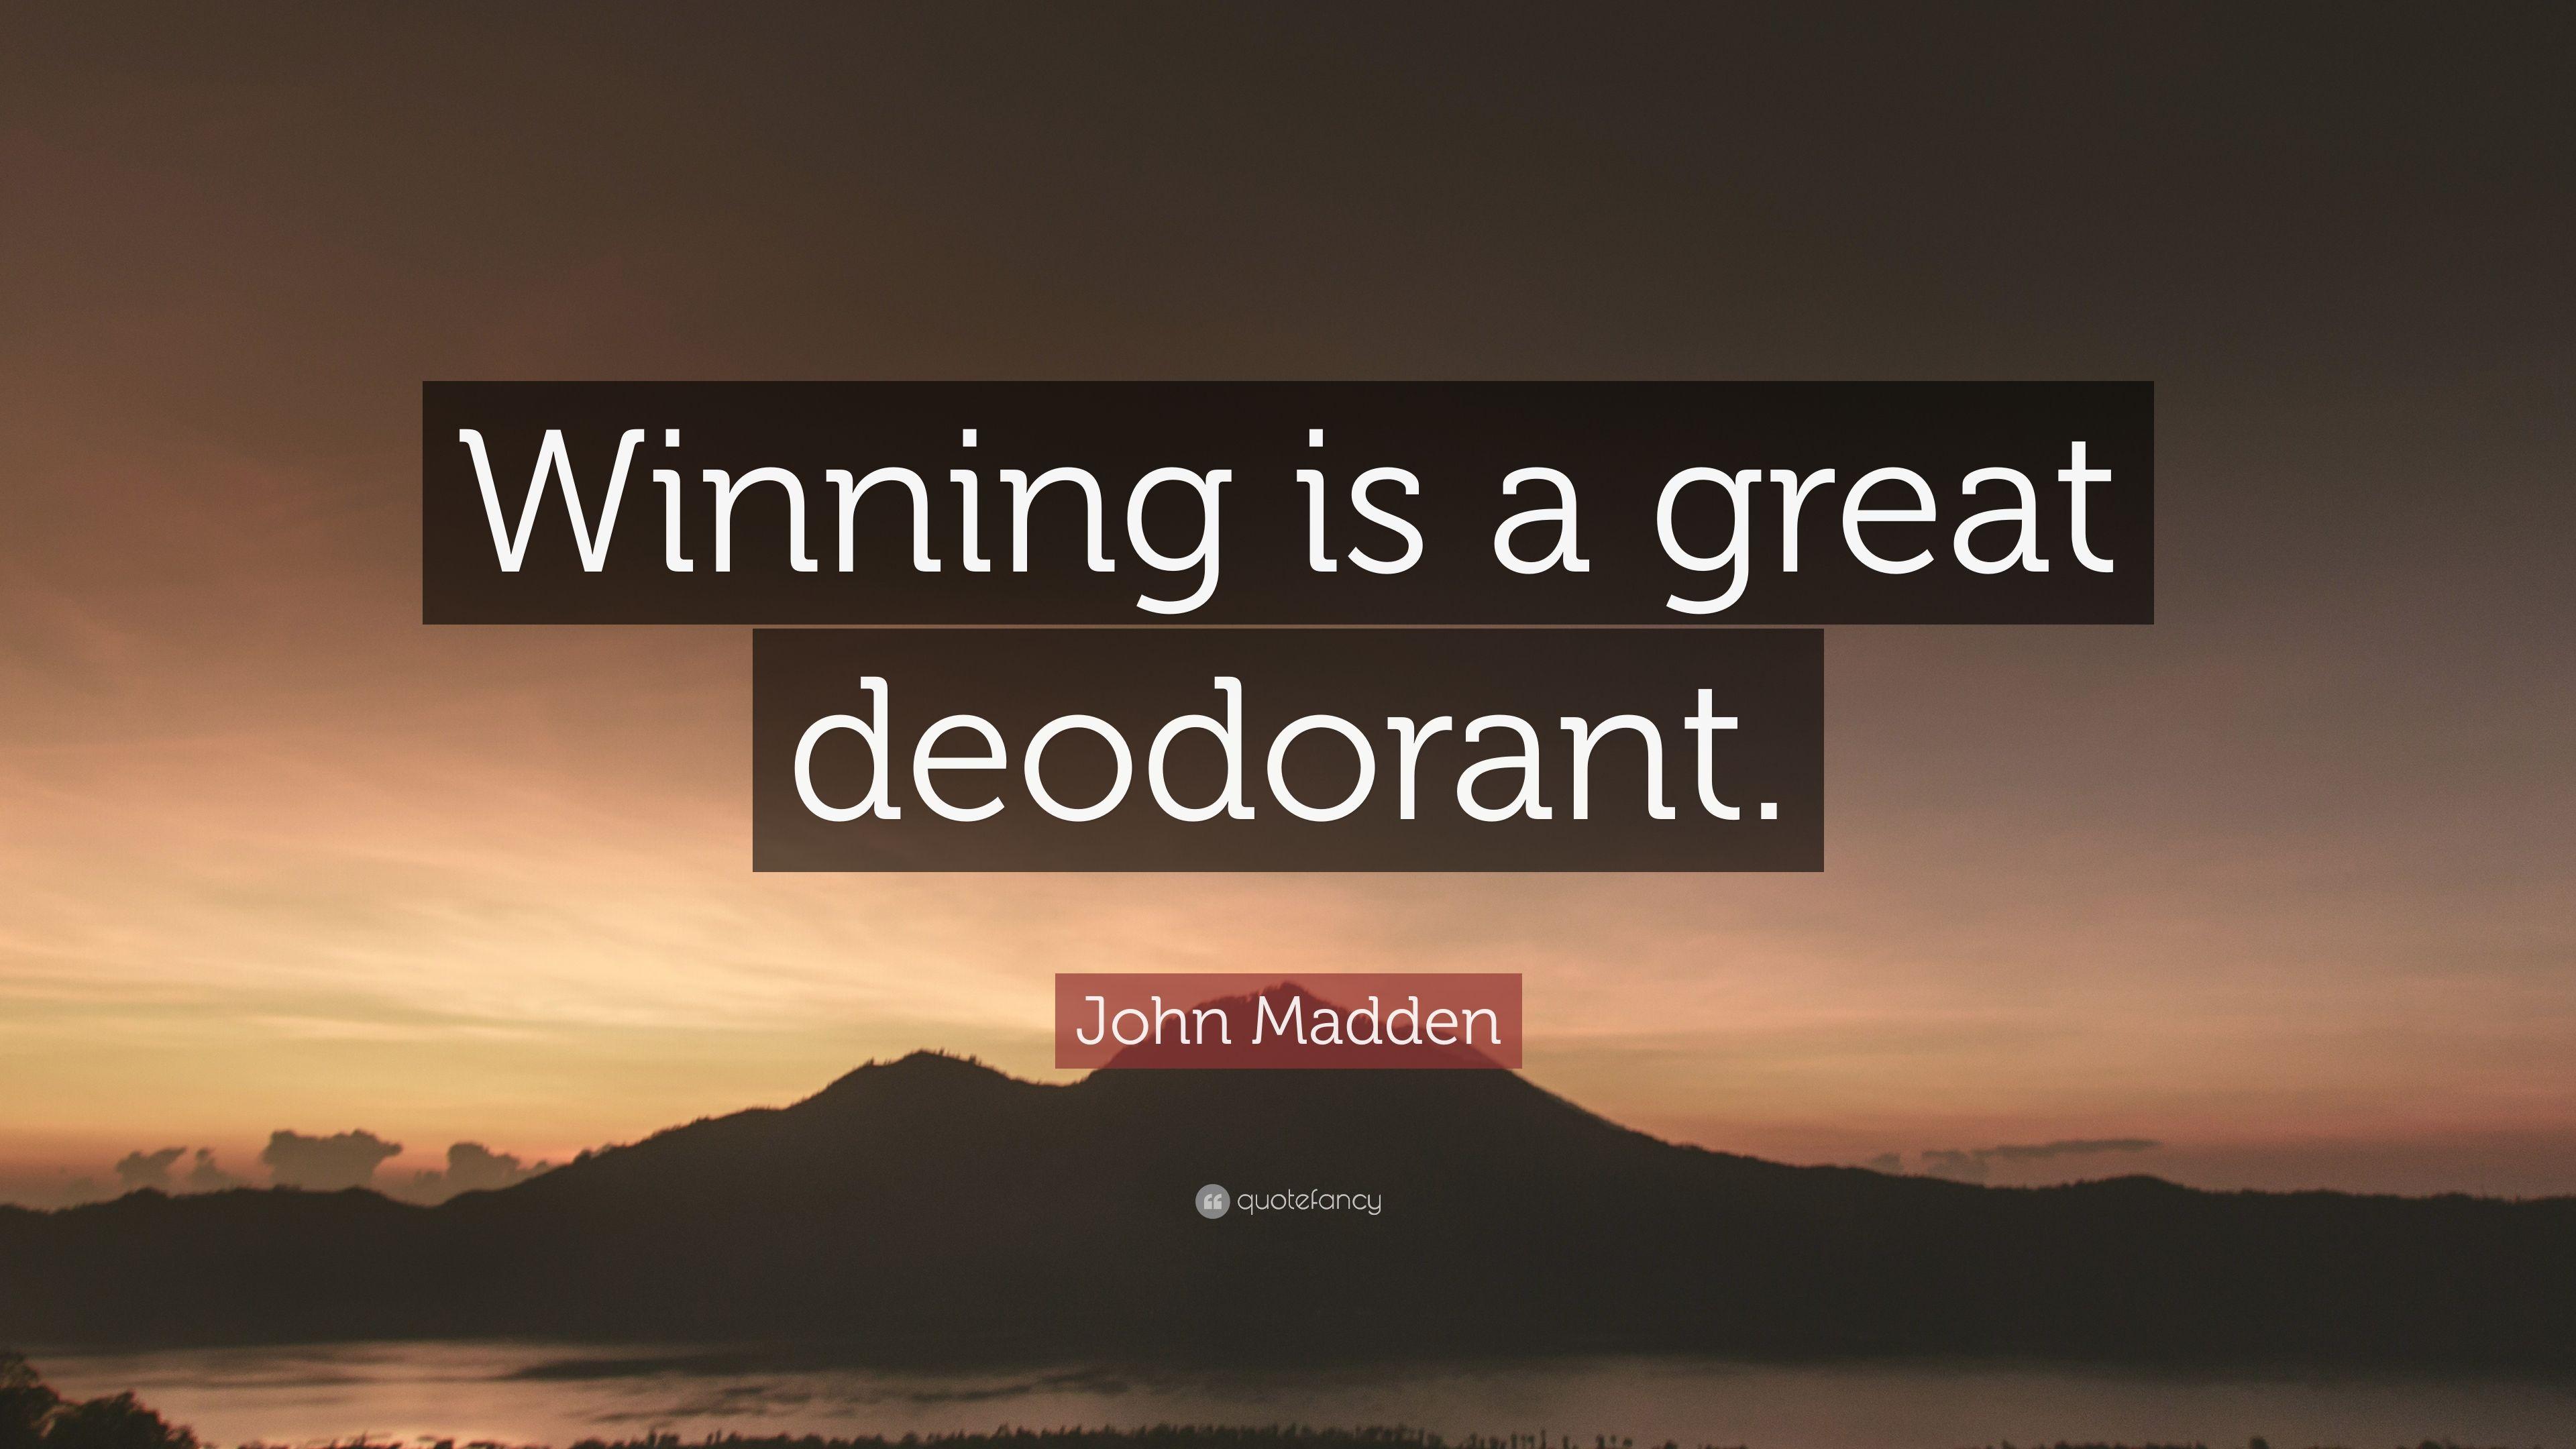 John Madden Quote: “Winning is a great deodorant.” 7 wallpaper